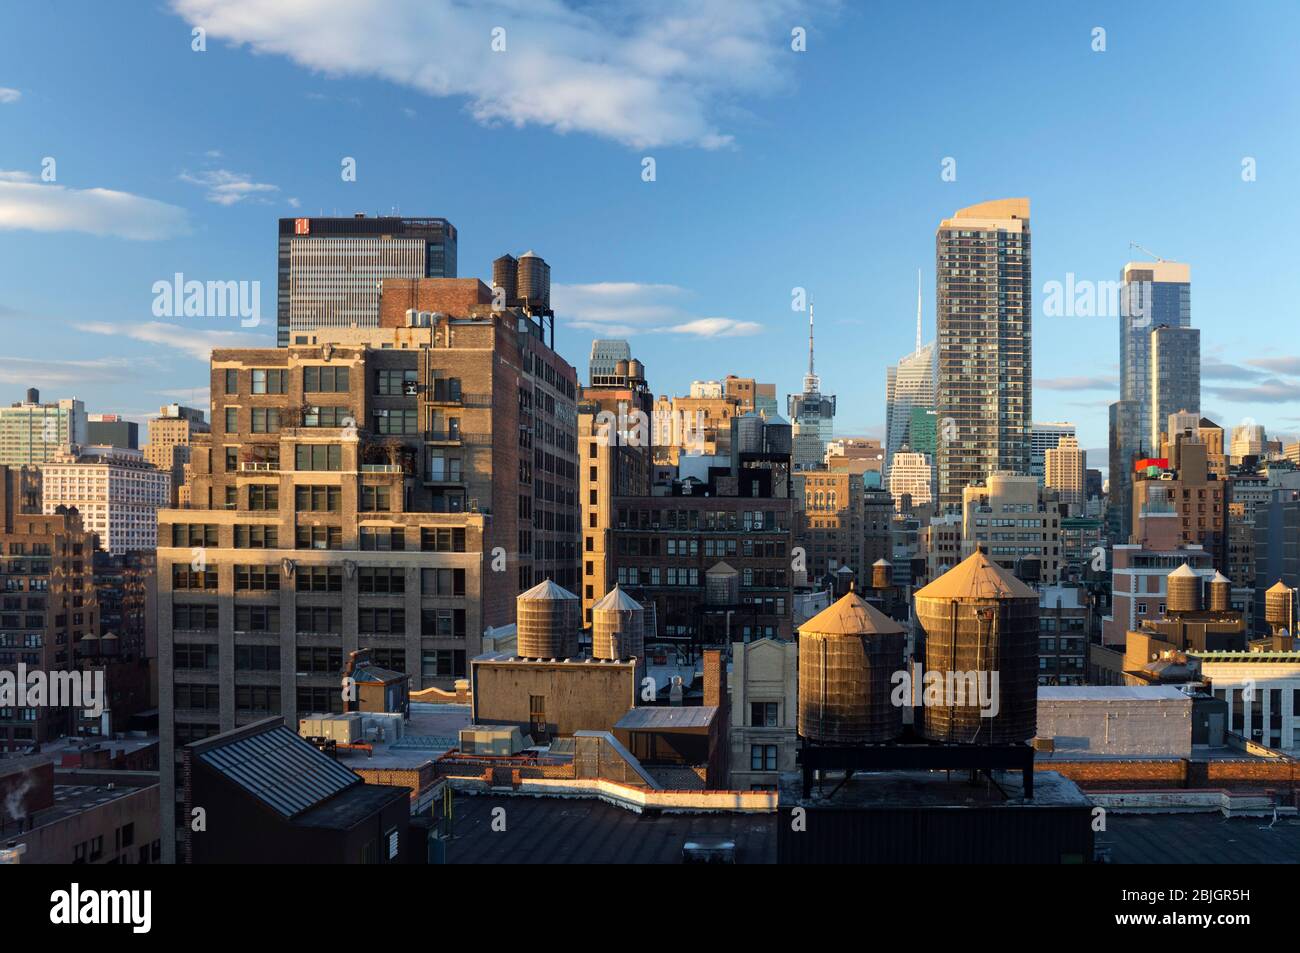 View across the rooftops of midtown, Manhattan towards skyscrapers Stock Photo